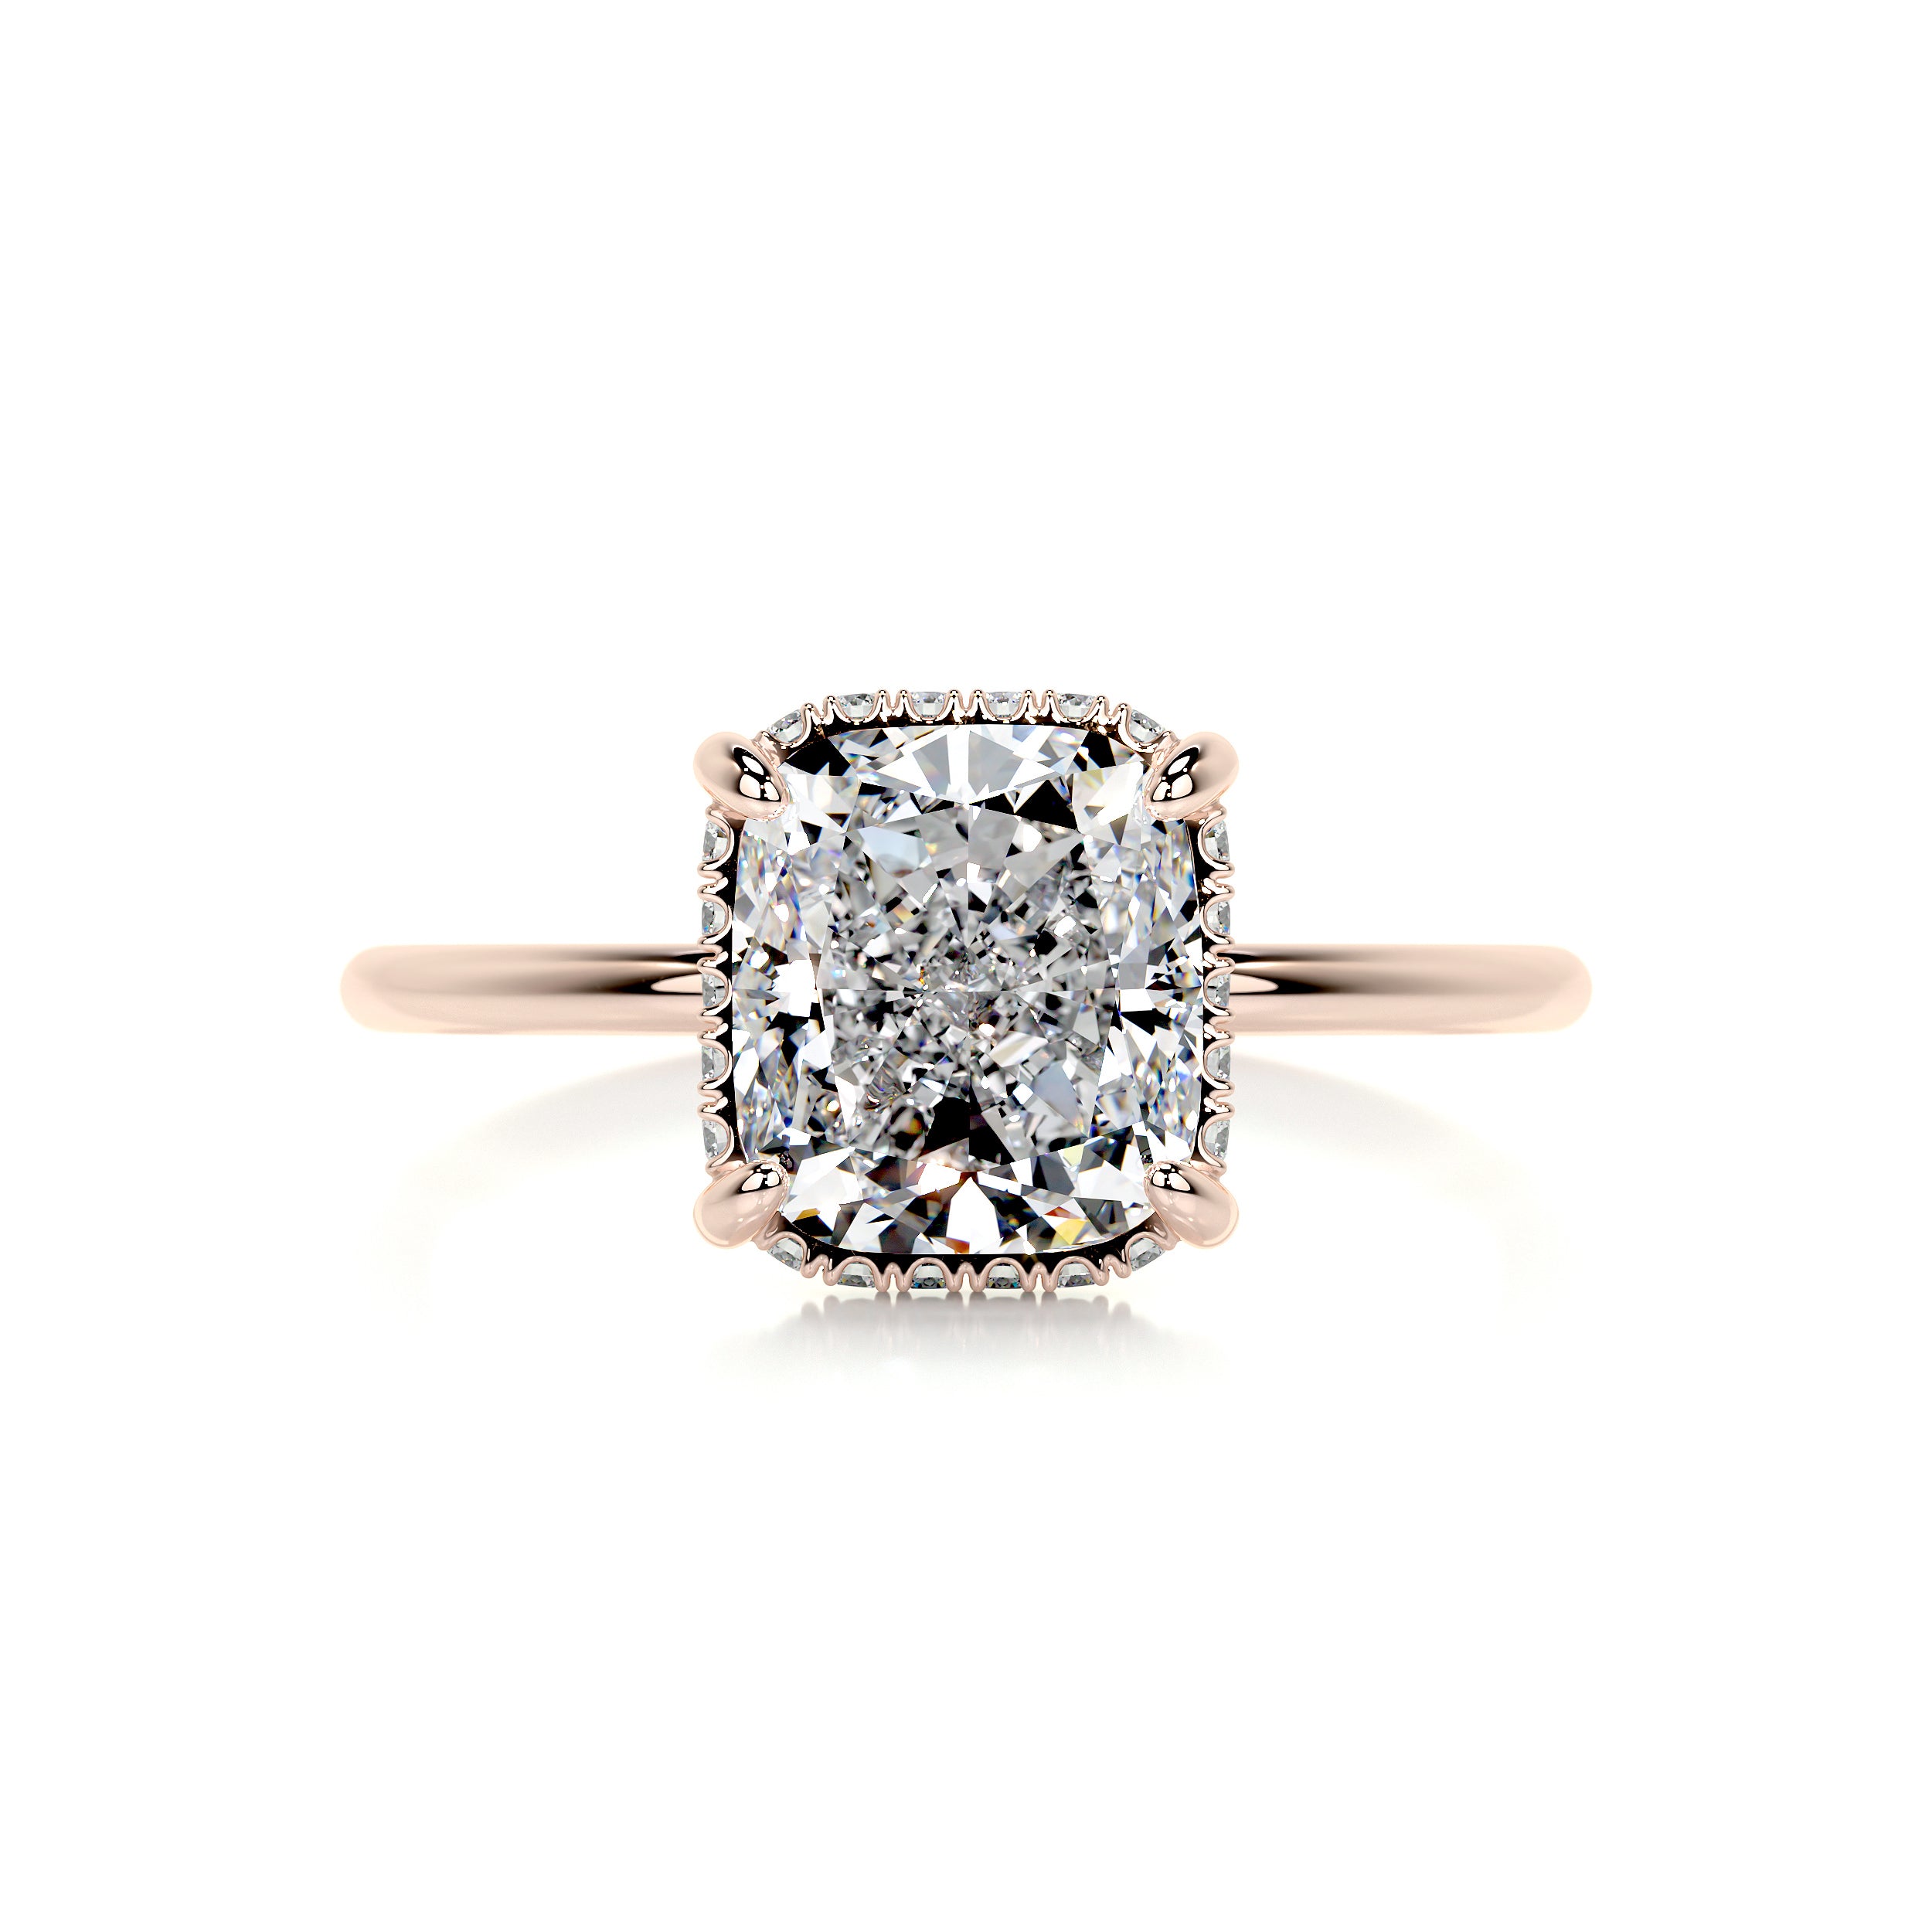 Priscilla Diamond Engagement Ring   (3.1 Carat) -14K Rose Gold